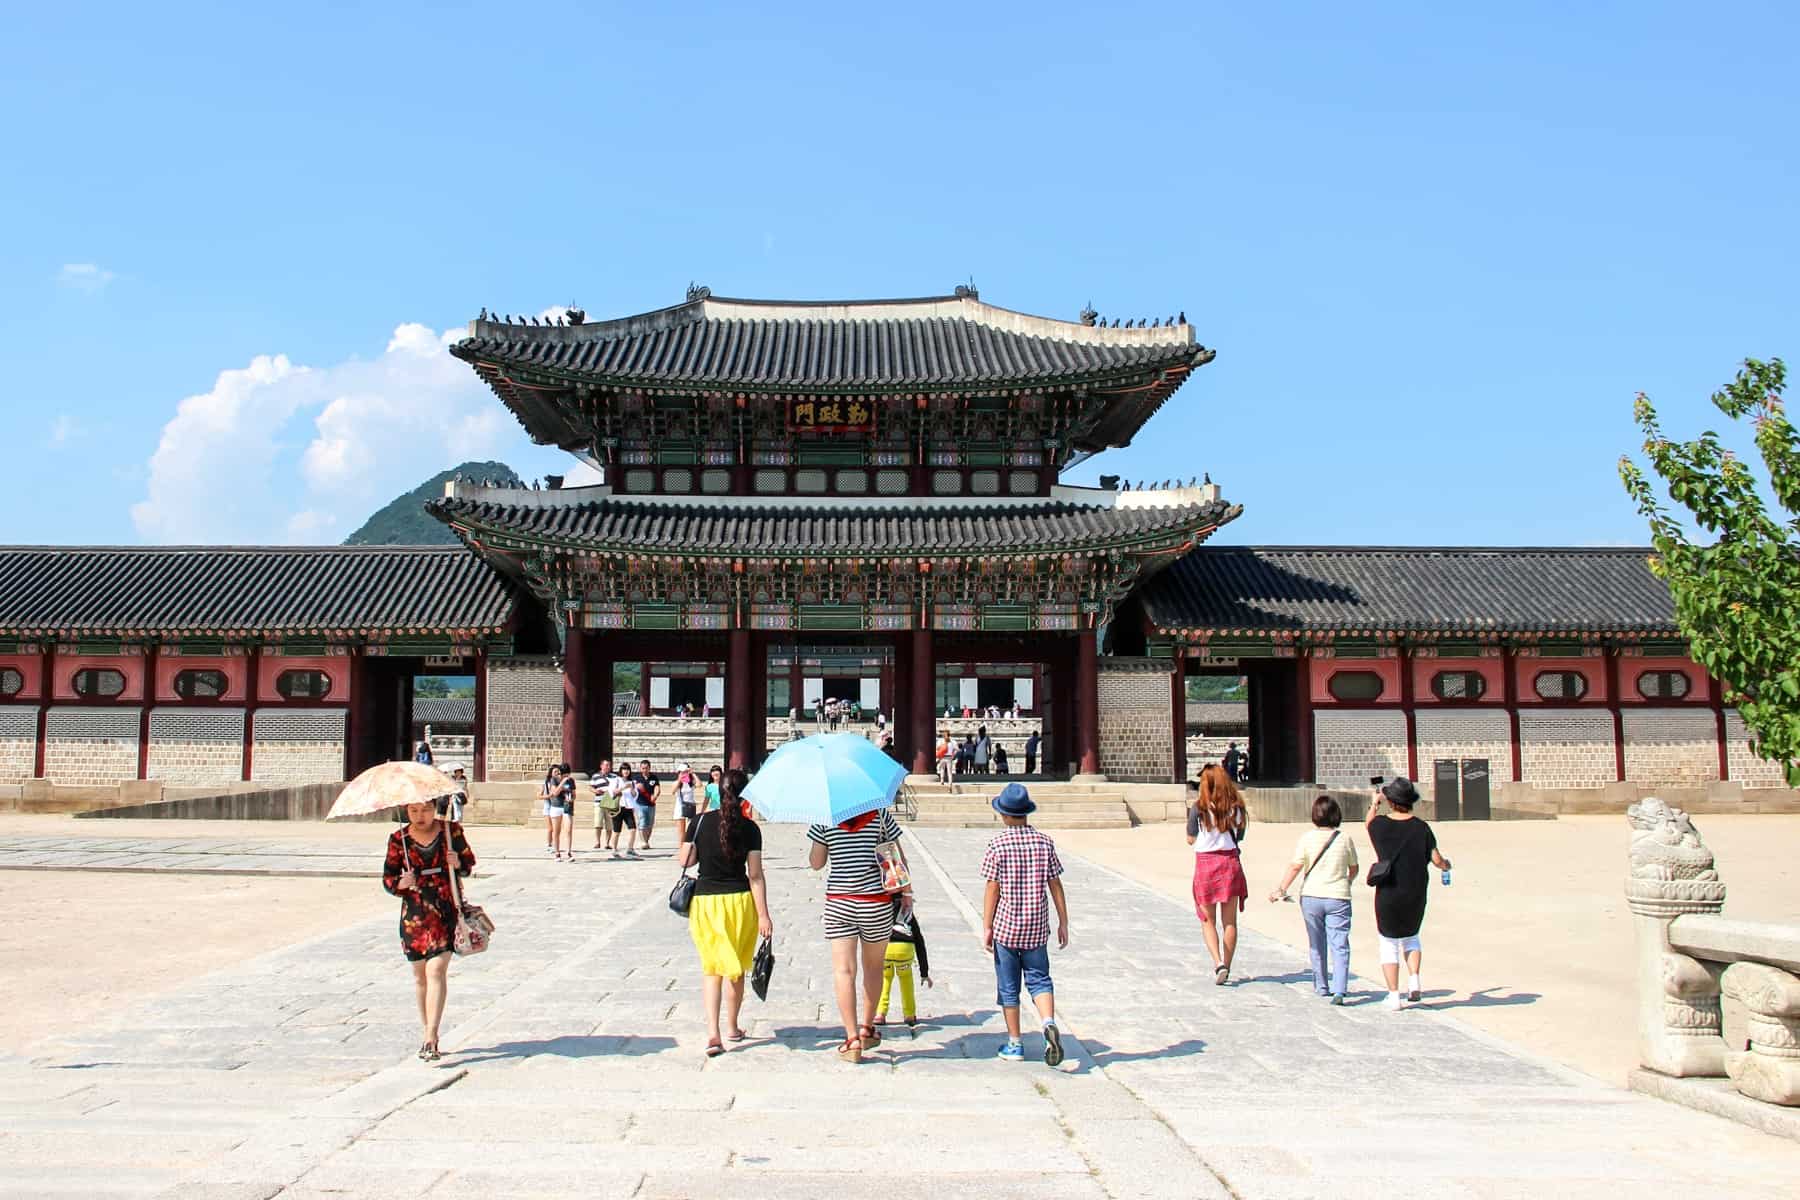 Tourists in Korea, some with sun umbrellas, walk towards the two-tier pagoda of Gyeongbokgung Palace in Seoul, South Korea. 